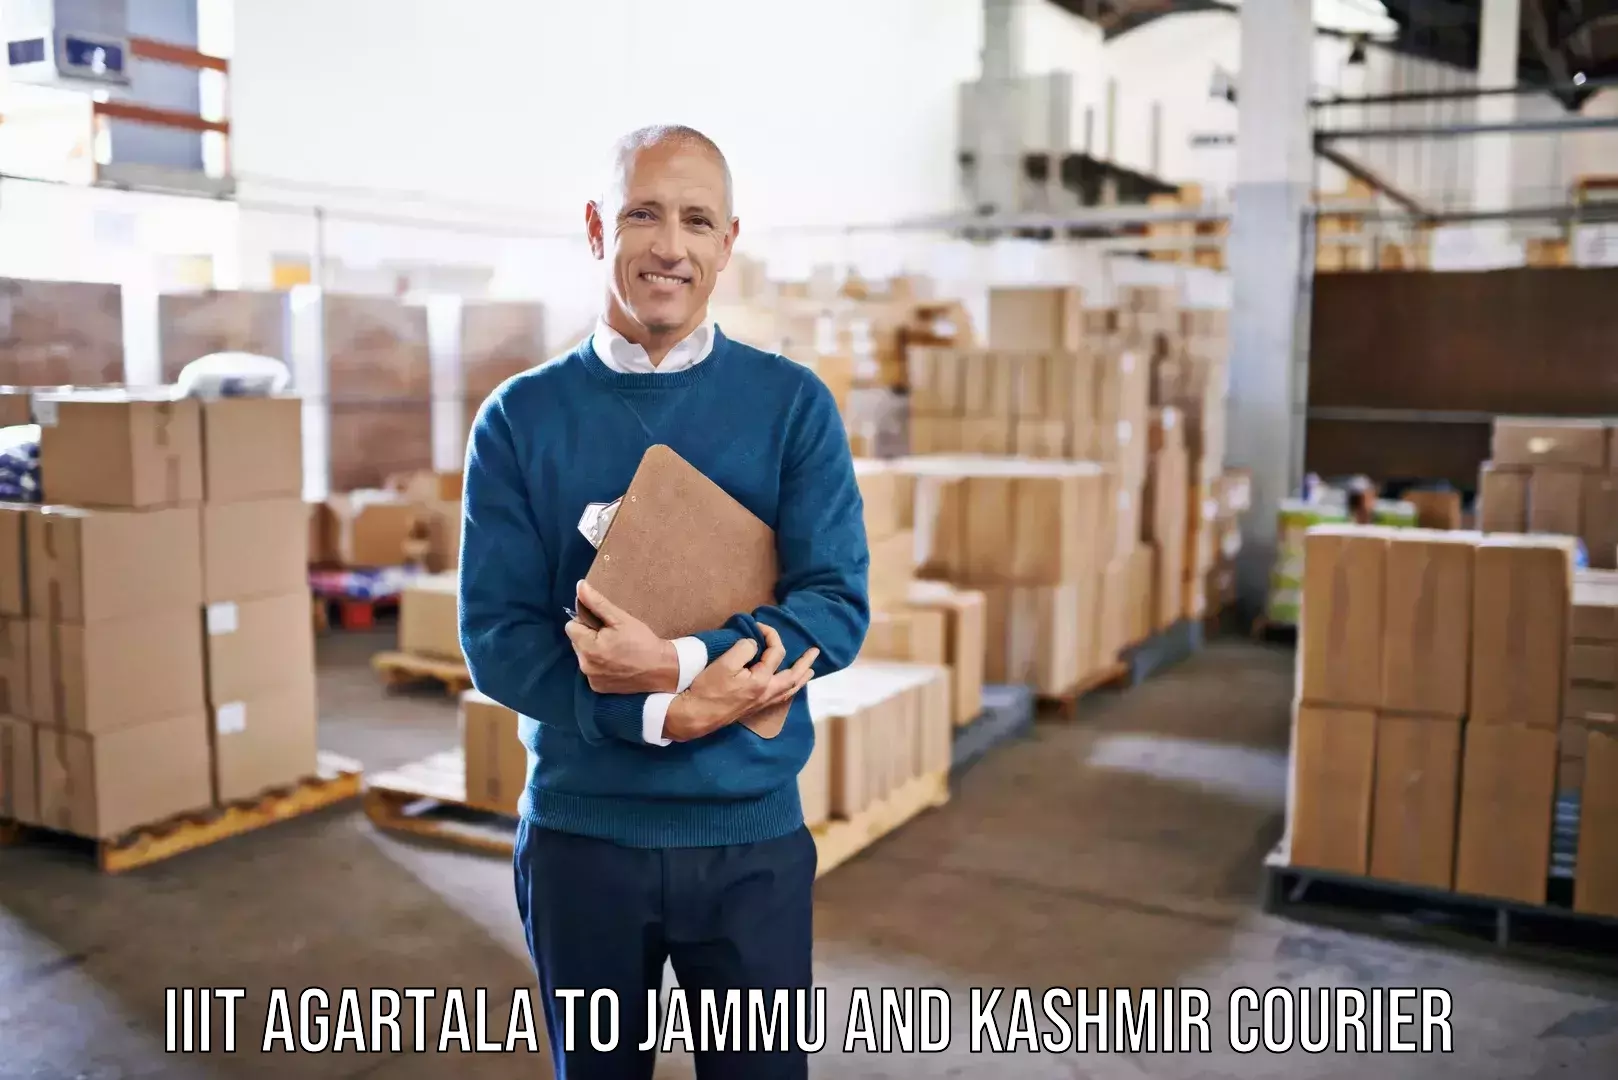 Quality moving company IIIT Agartala to Srinagar Kashmir